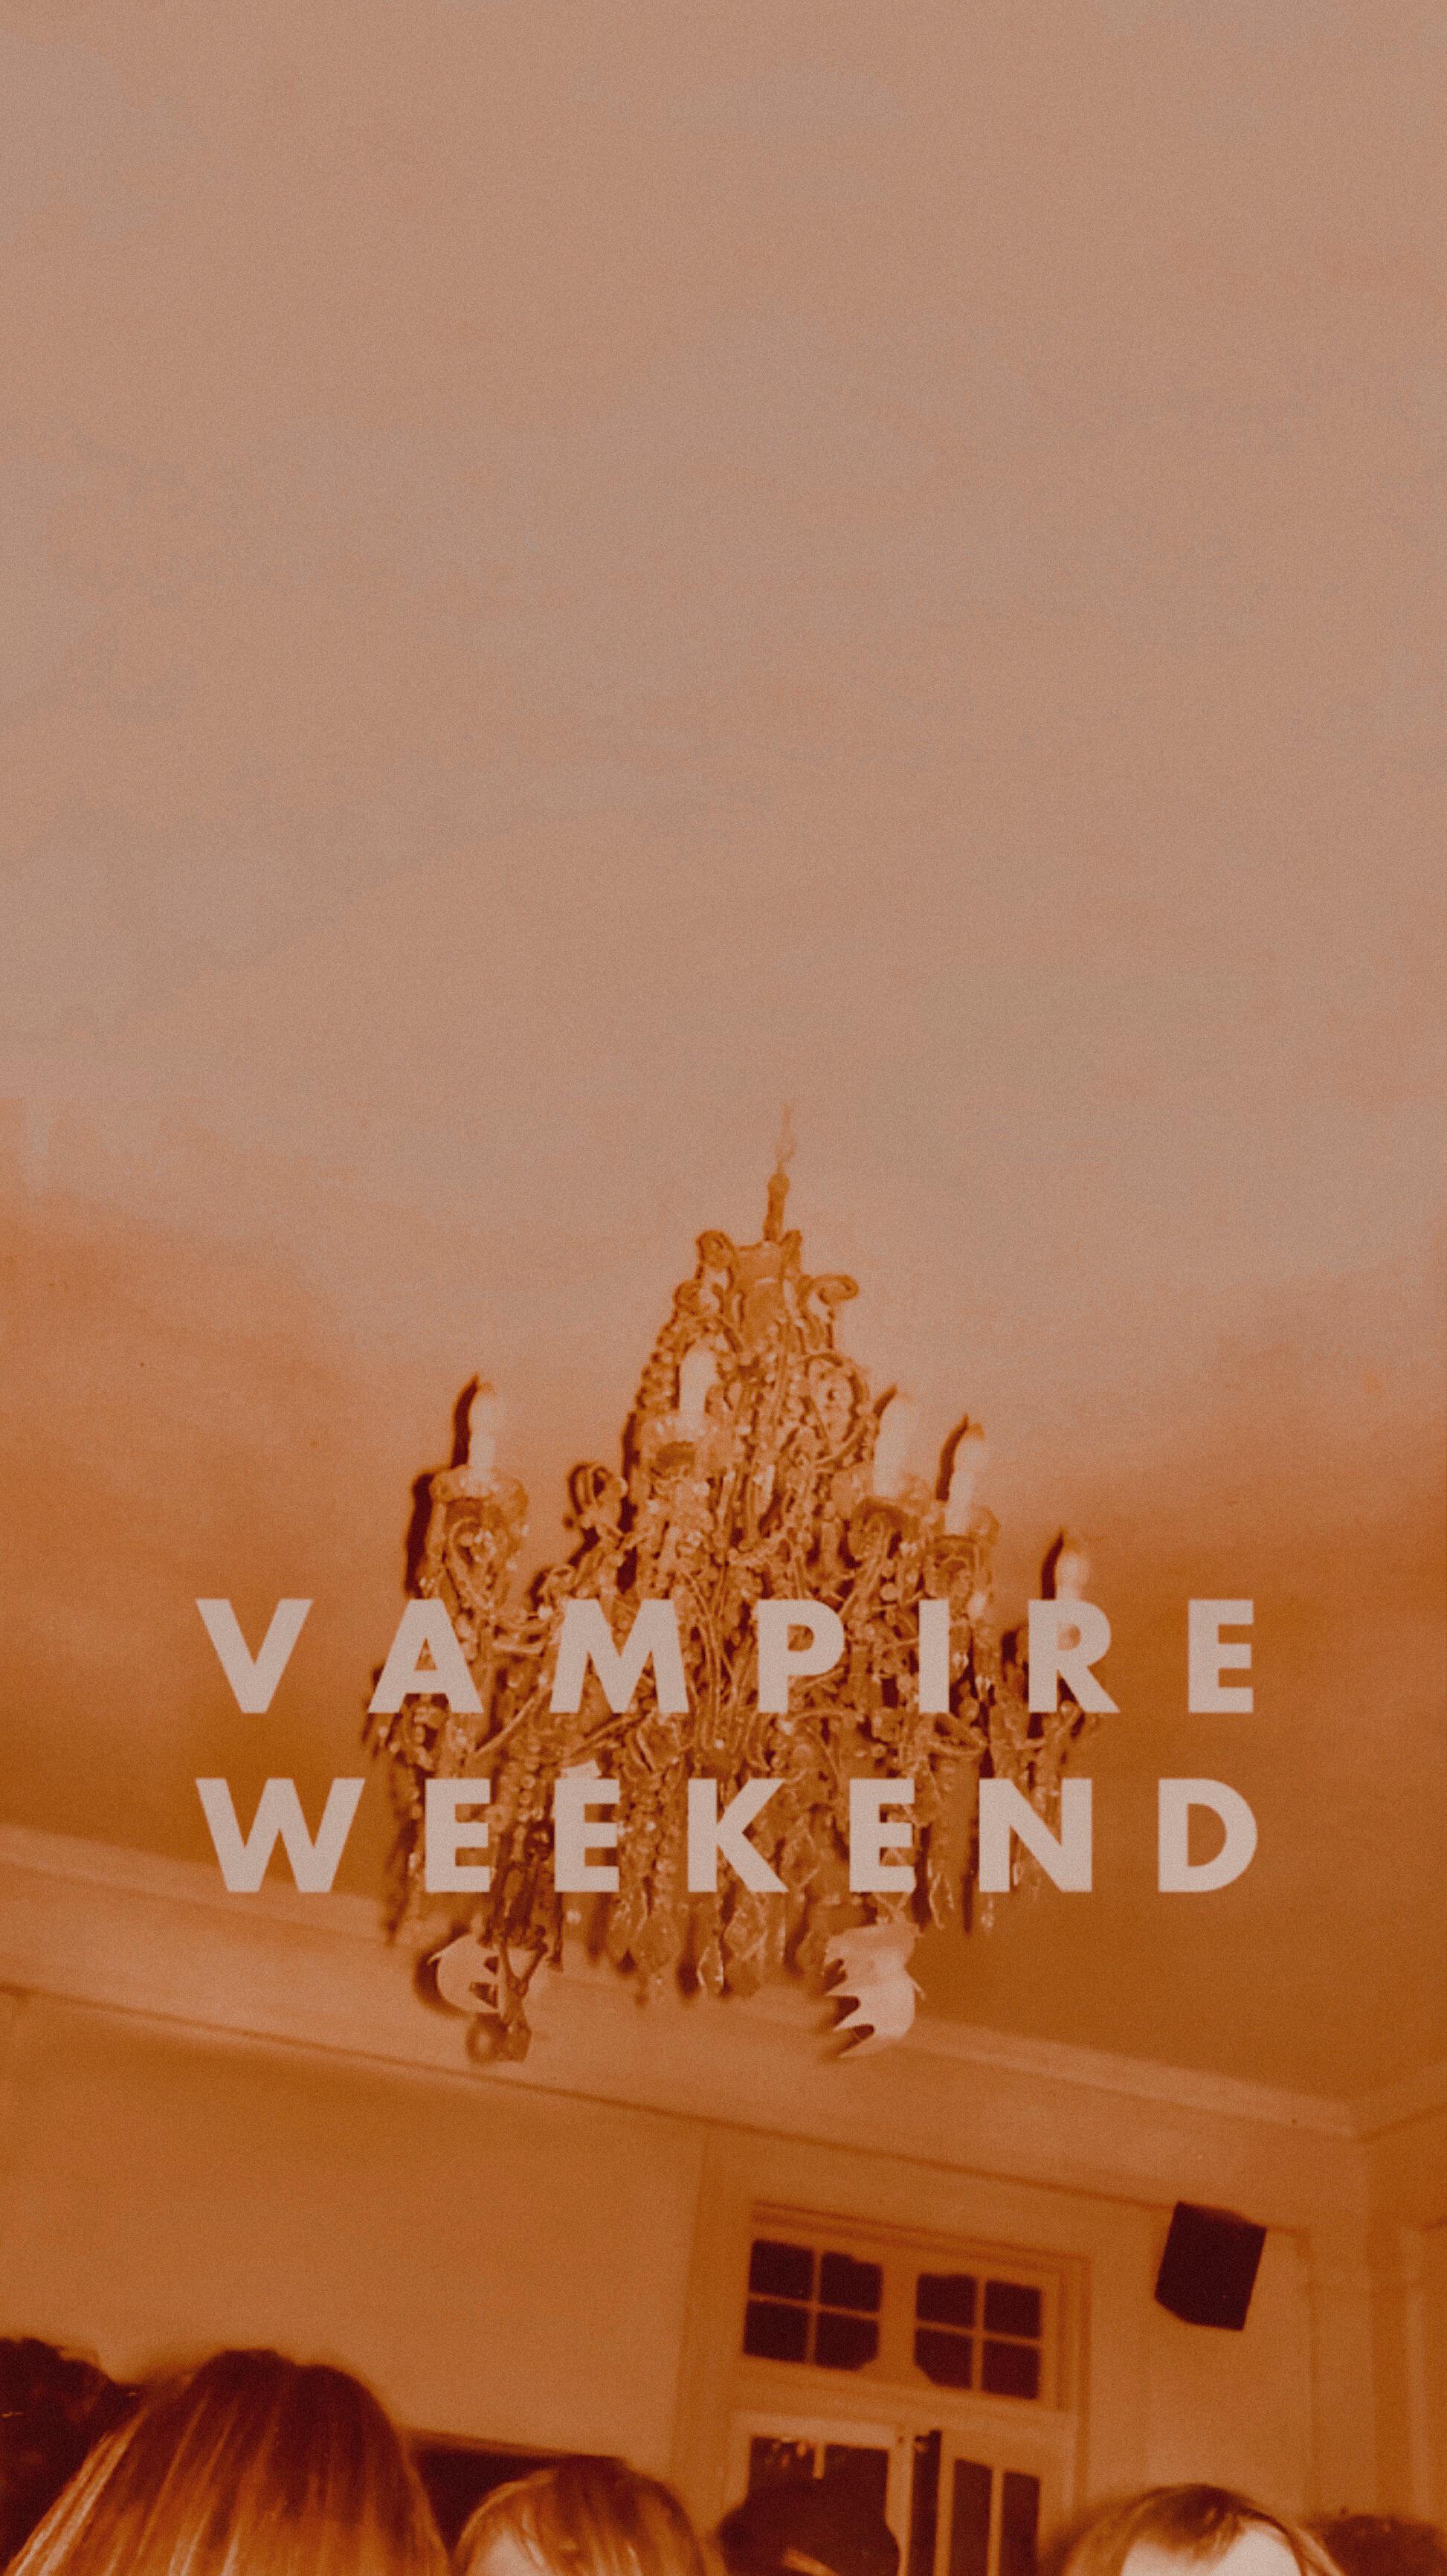 The album cover for Vampire Weekend's self-titled album. - Vampire